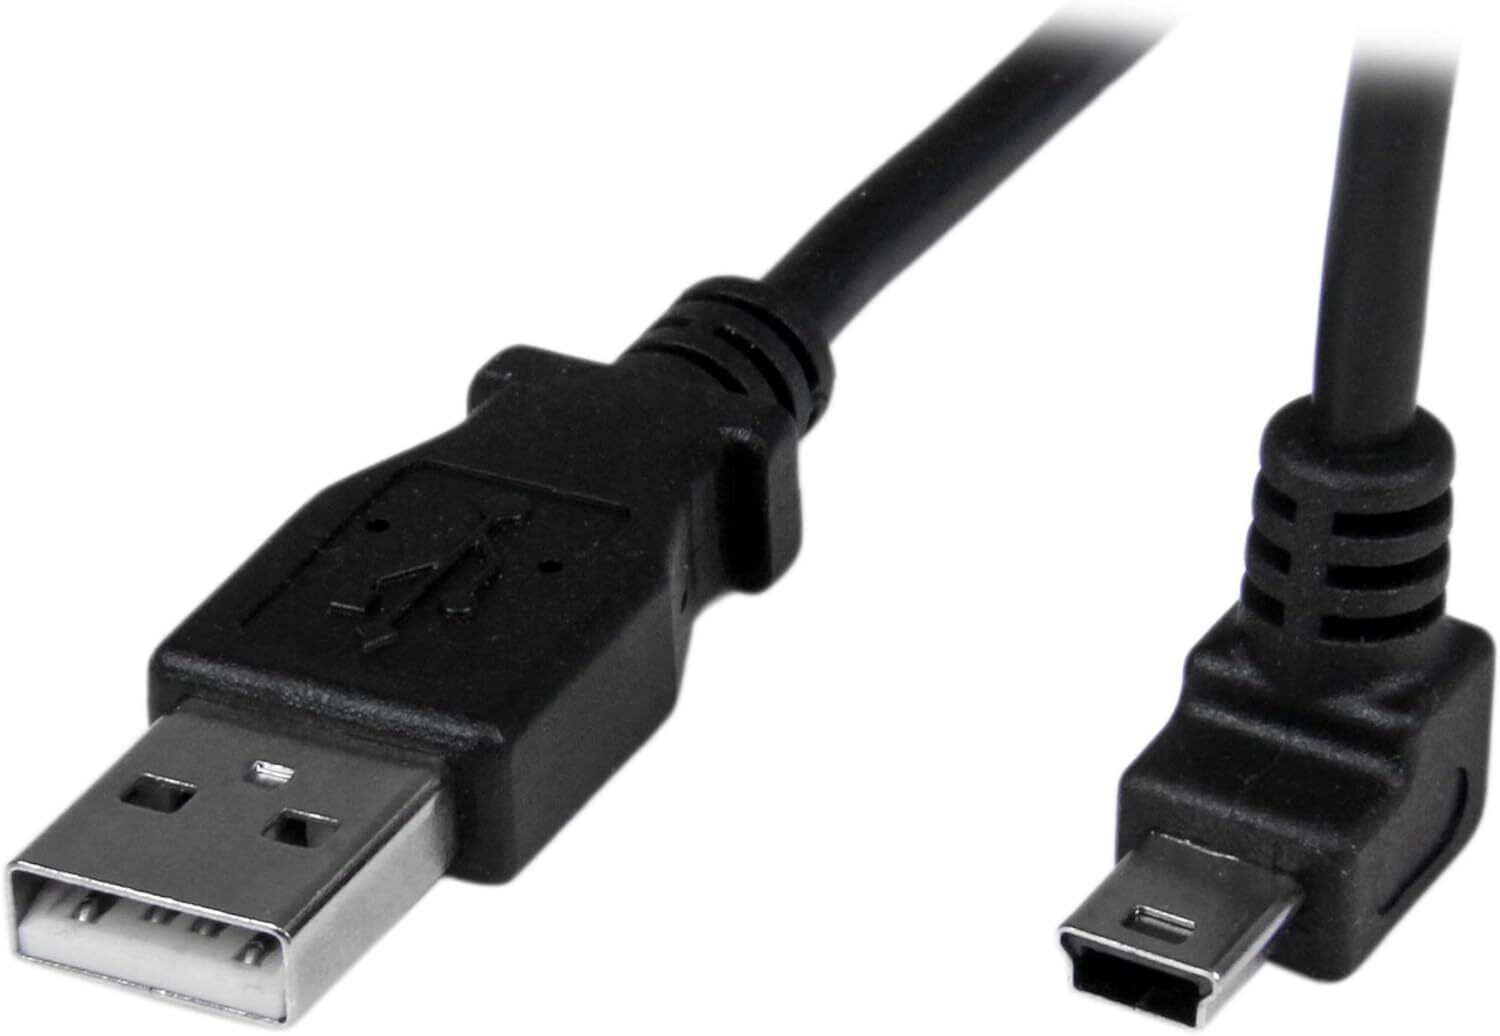 StarTech.com 1m Mini USB Cable Cord - A to Up Angle B - 3 ft / 1m, Black 